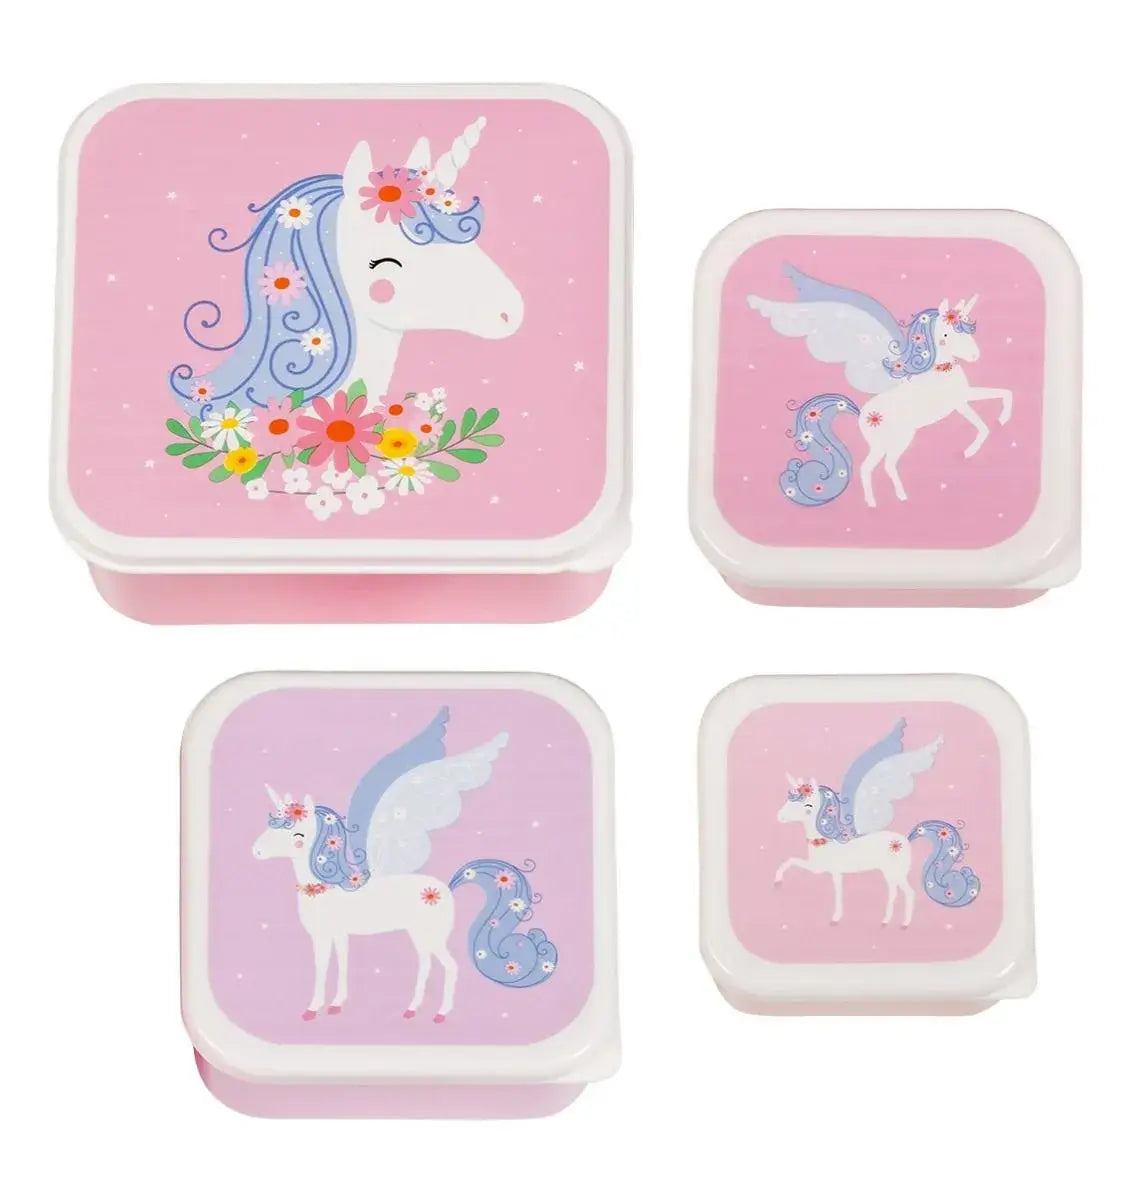 snackdoosjes brooddoos eenhoorn unicorn roze meisje peuter kleuter set van 4 a little lovely company snackbakjes bovenaanzicht